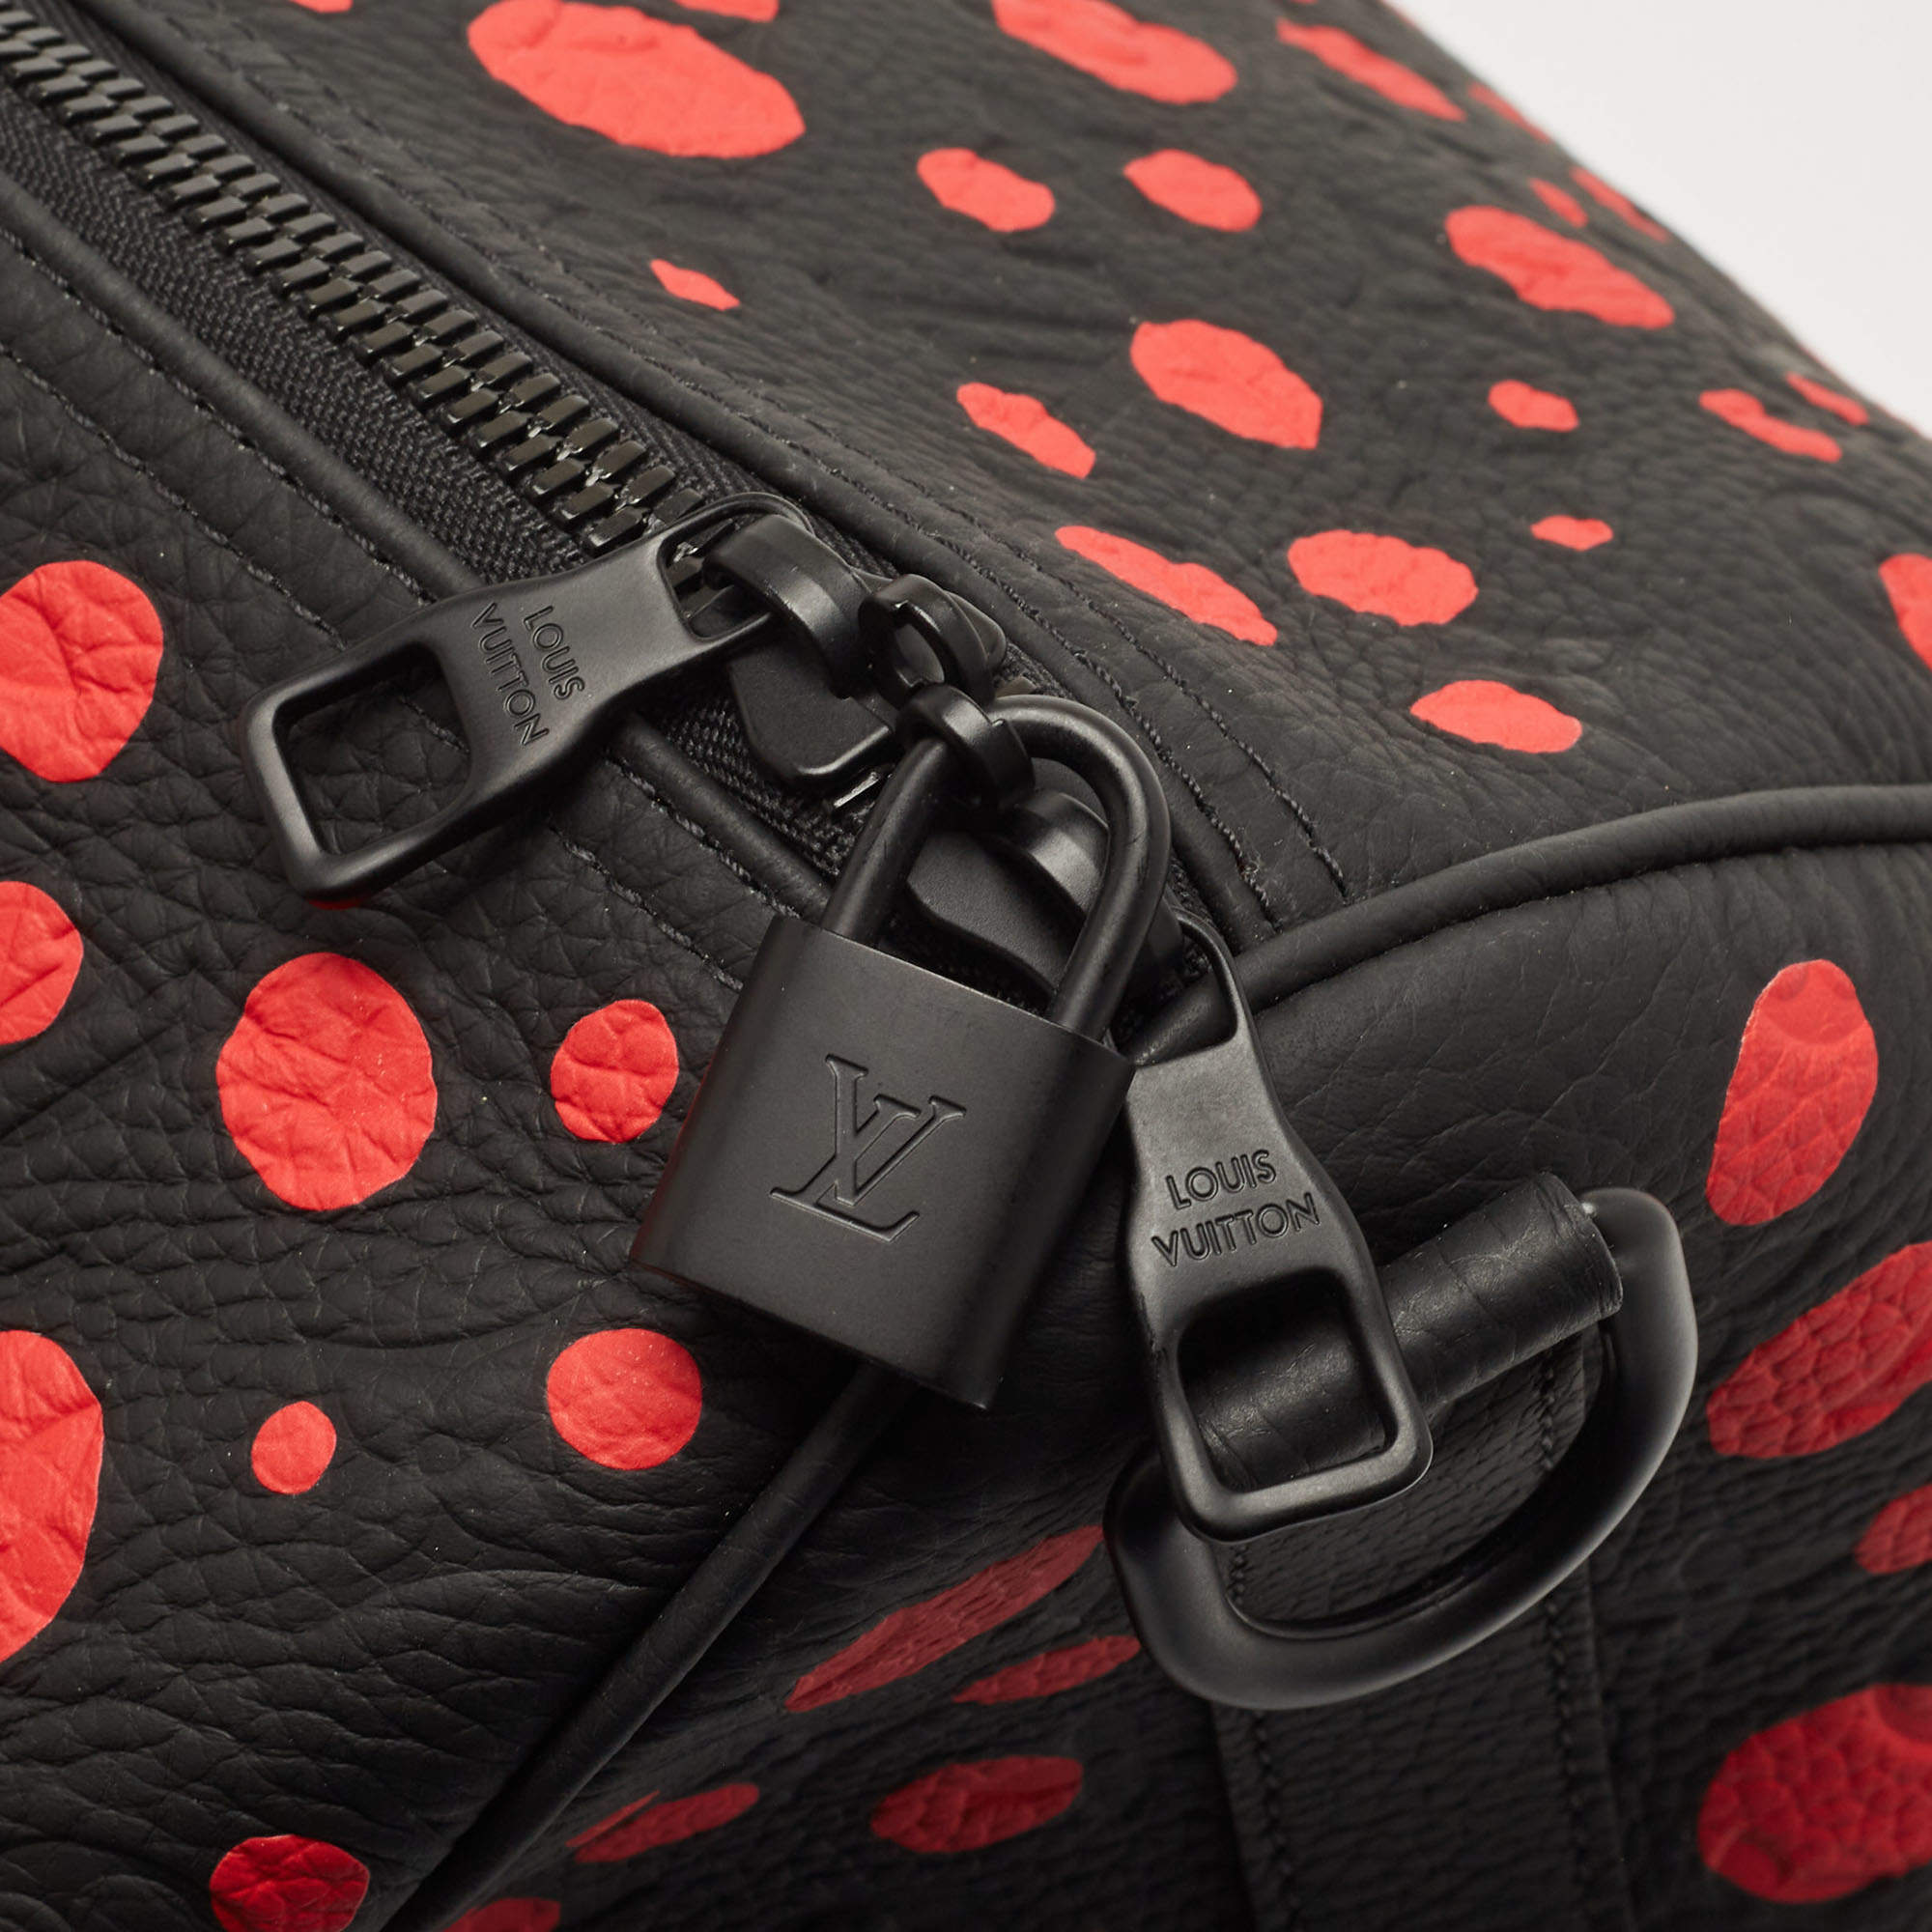 Cloth travel bag Louis Vuitton x Yayoi Kusama Black in Cloth - 30195844